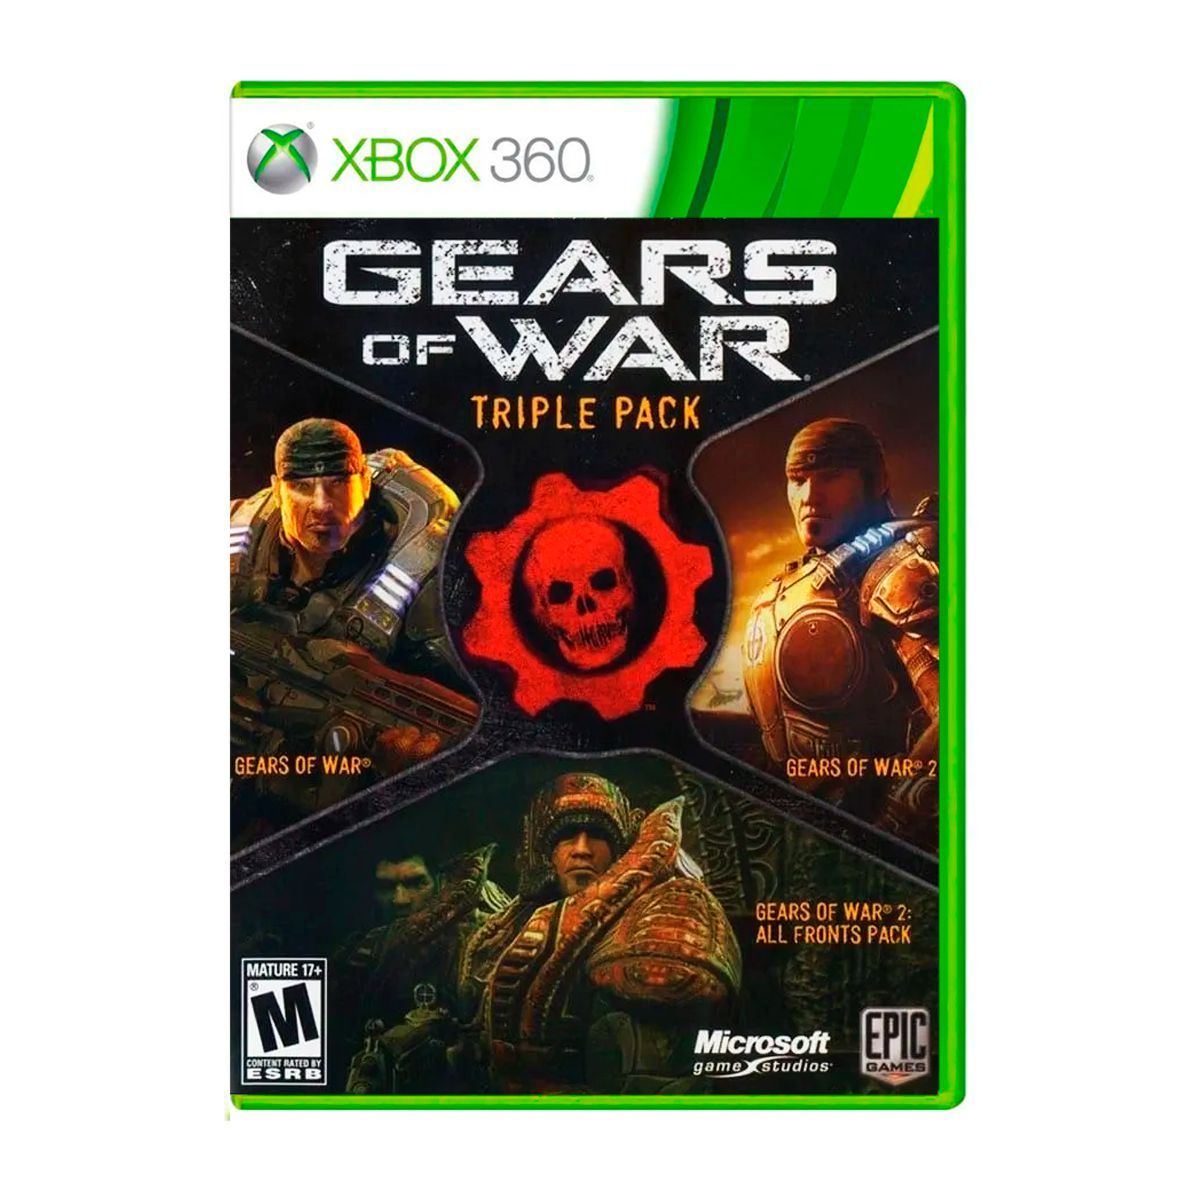 Gears of War 2 - Xbox 360 (SEMI-NOVO)